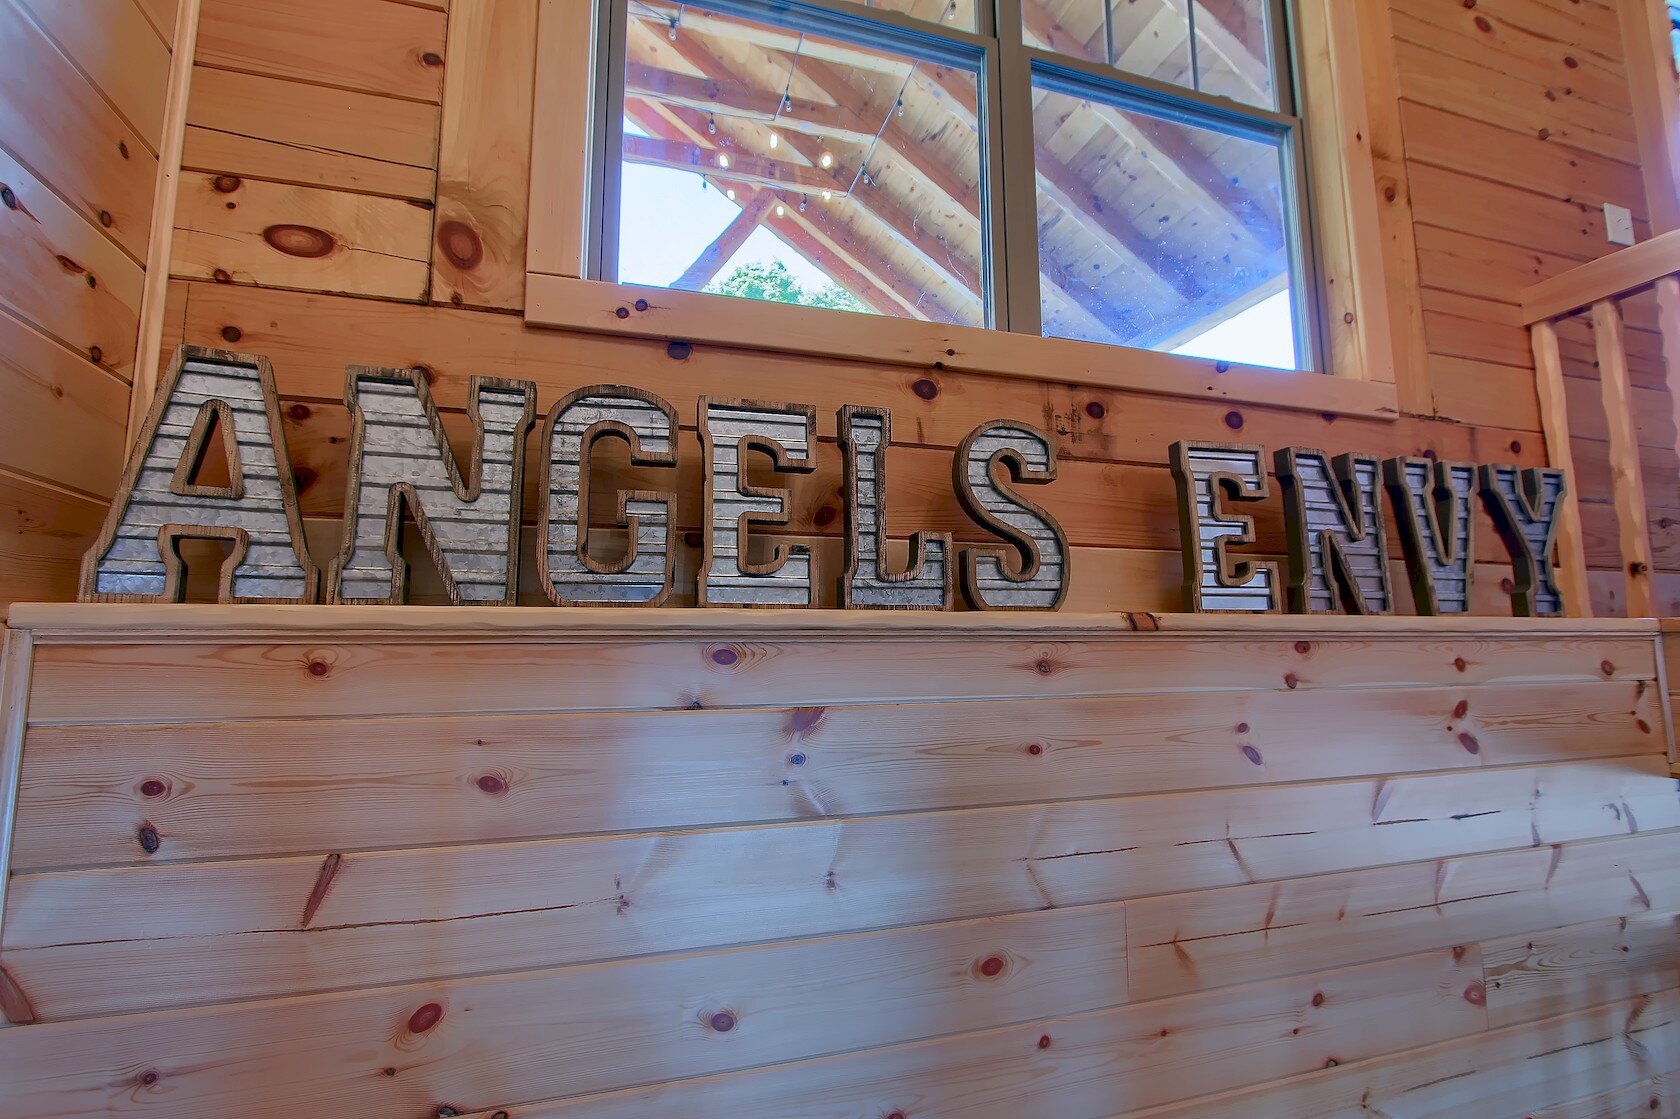 Angels-Envy.jpg